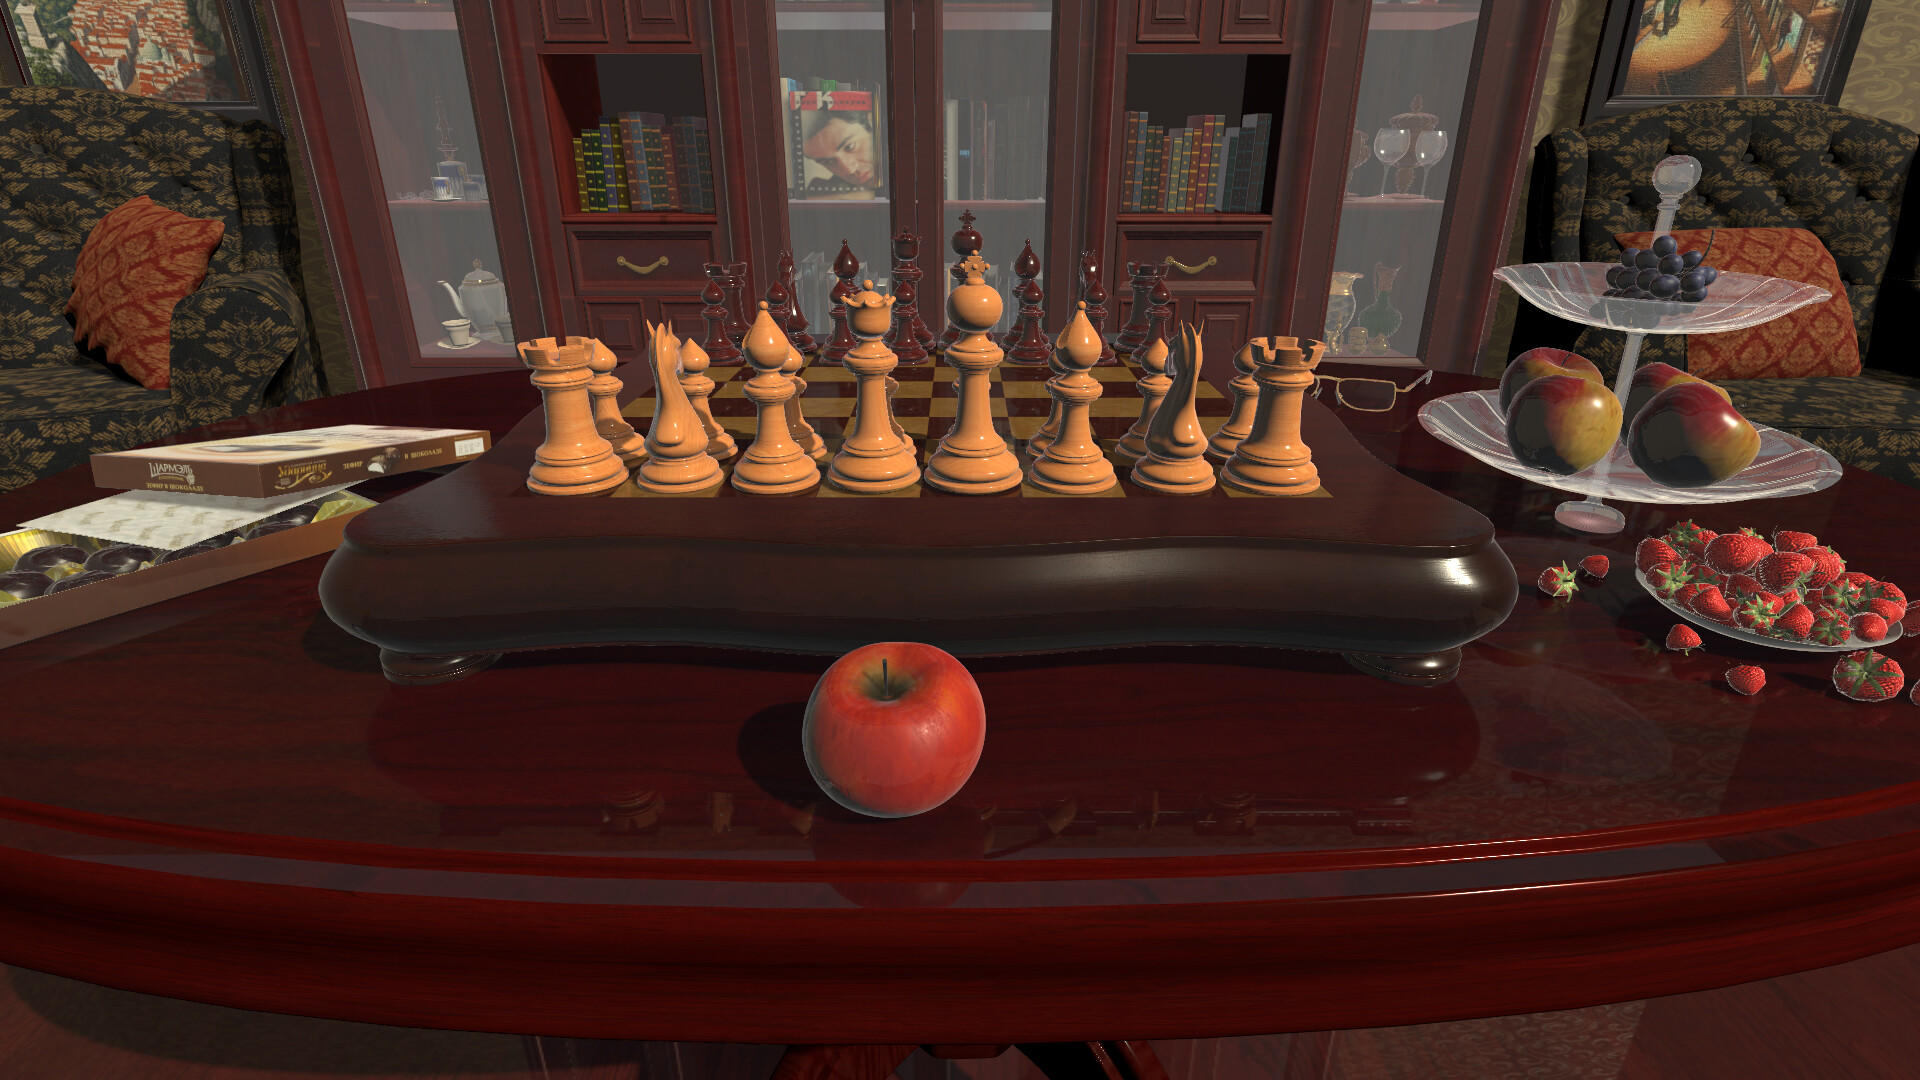 Screenshot of Progress Chess